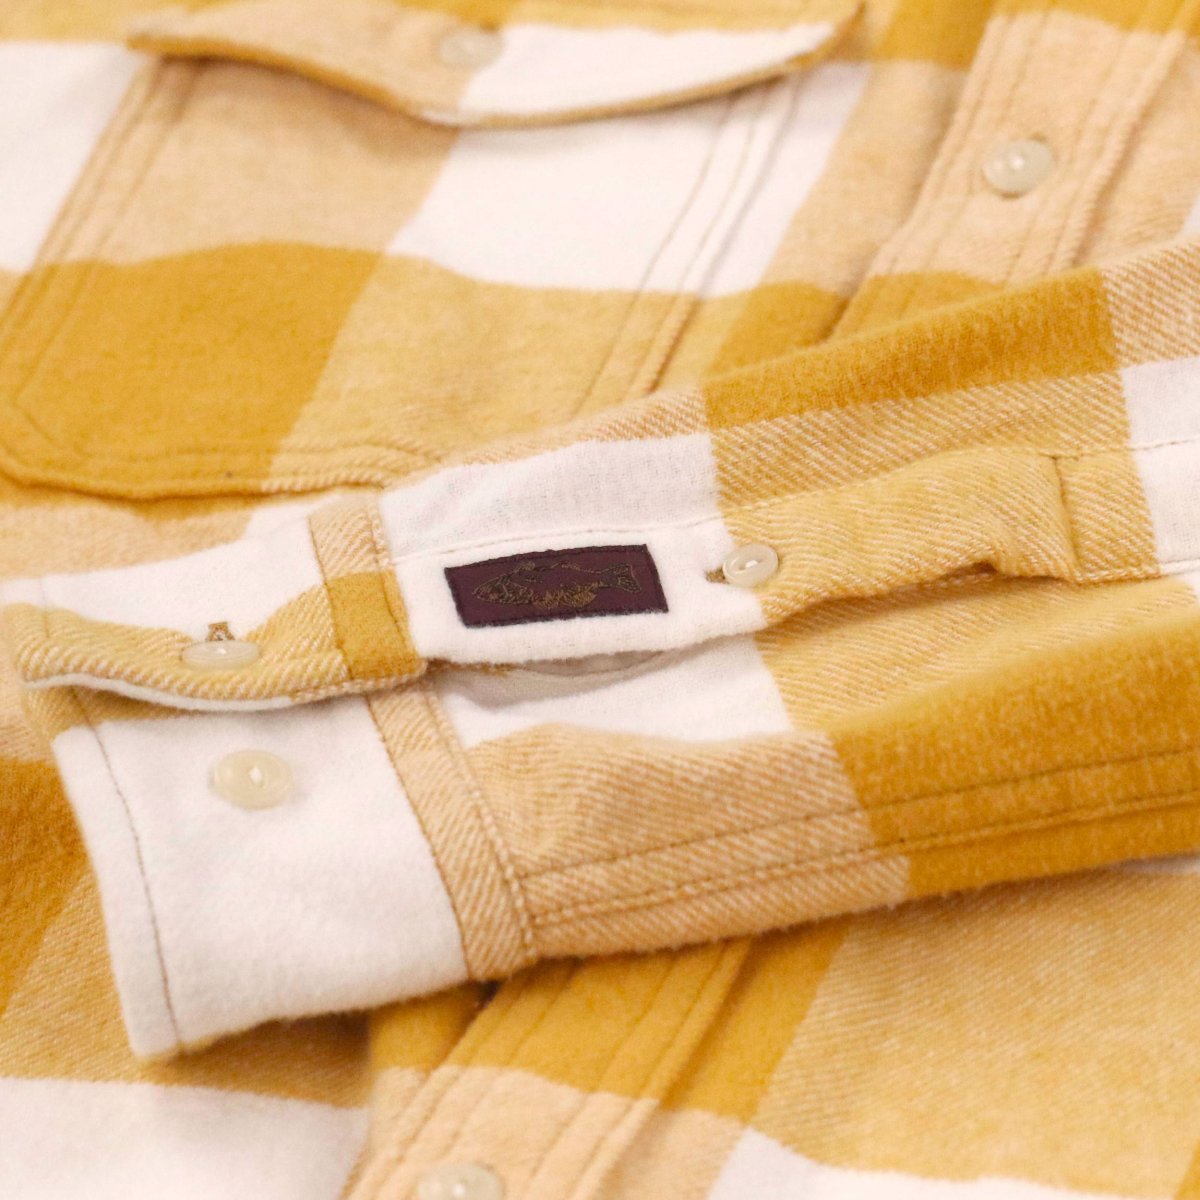 Medium flannel Long sleeves Shirt